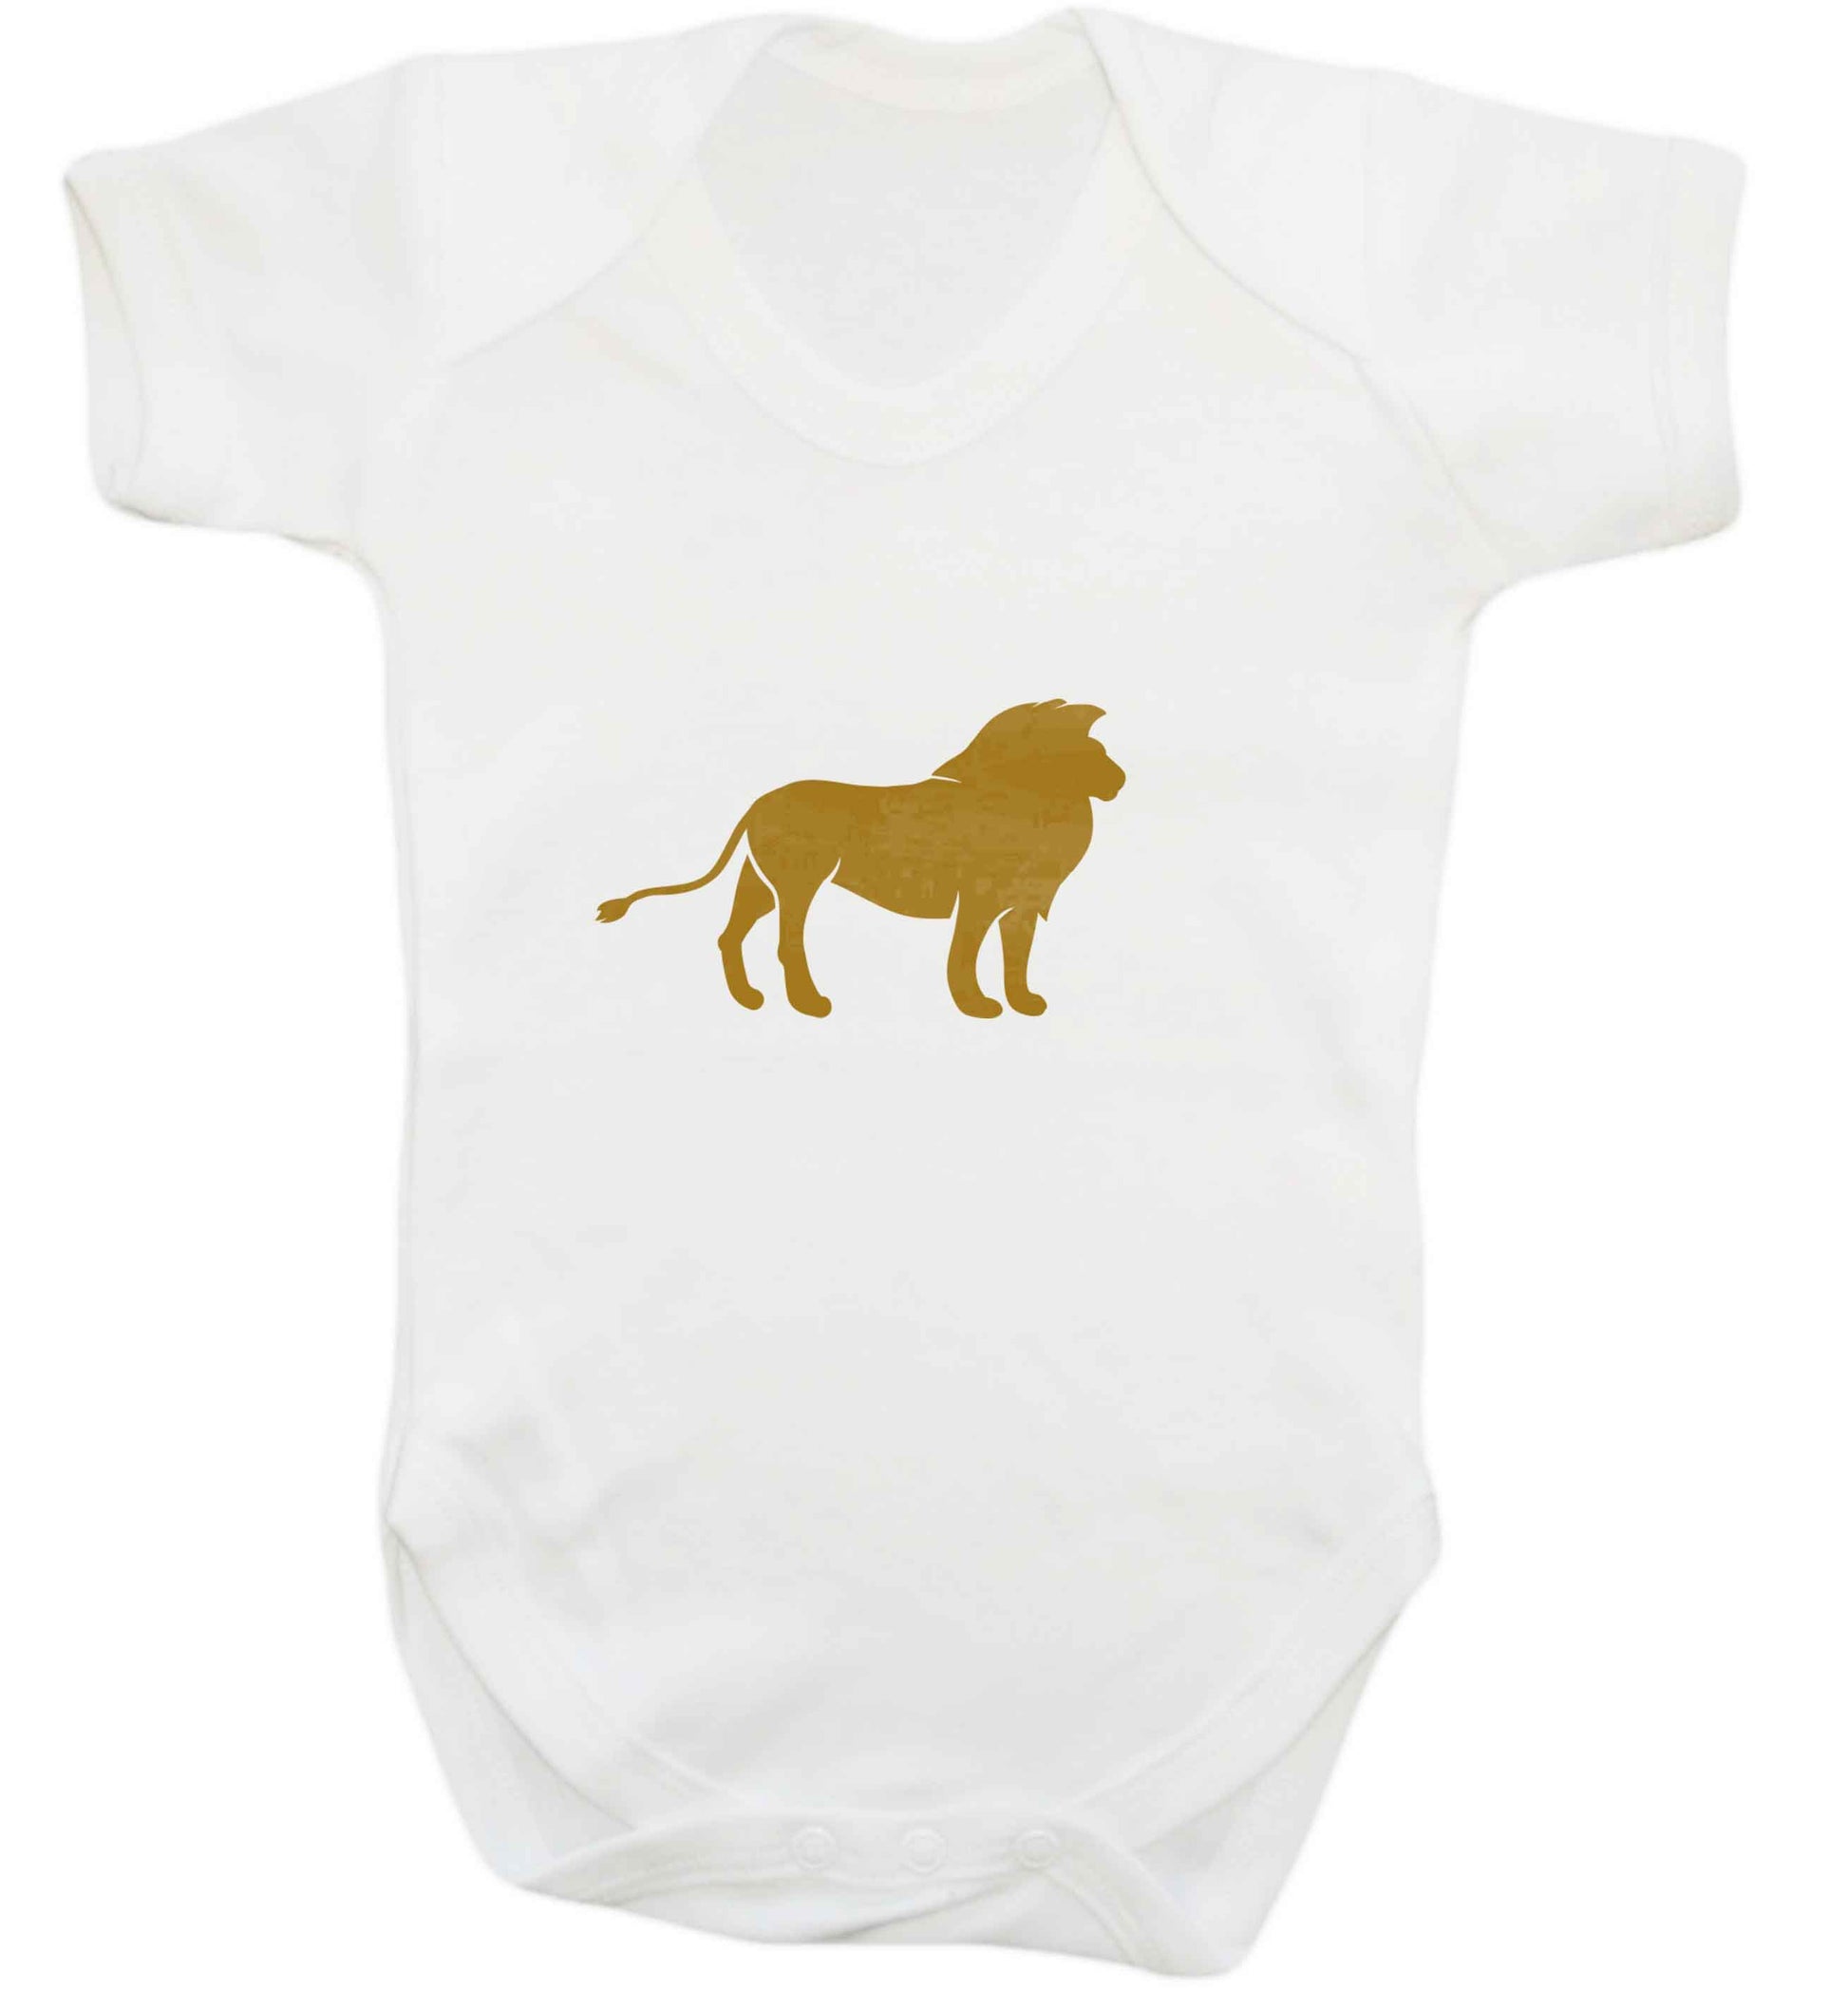 Gold lion baby vest white 18-24 months